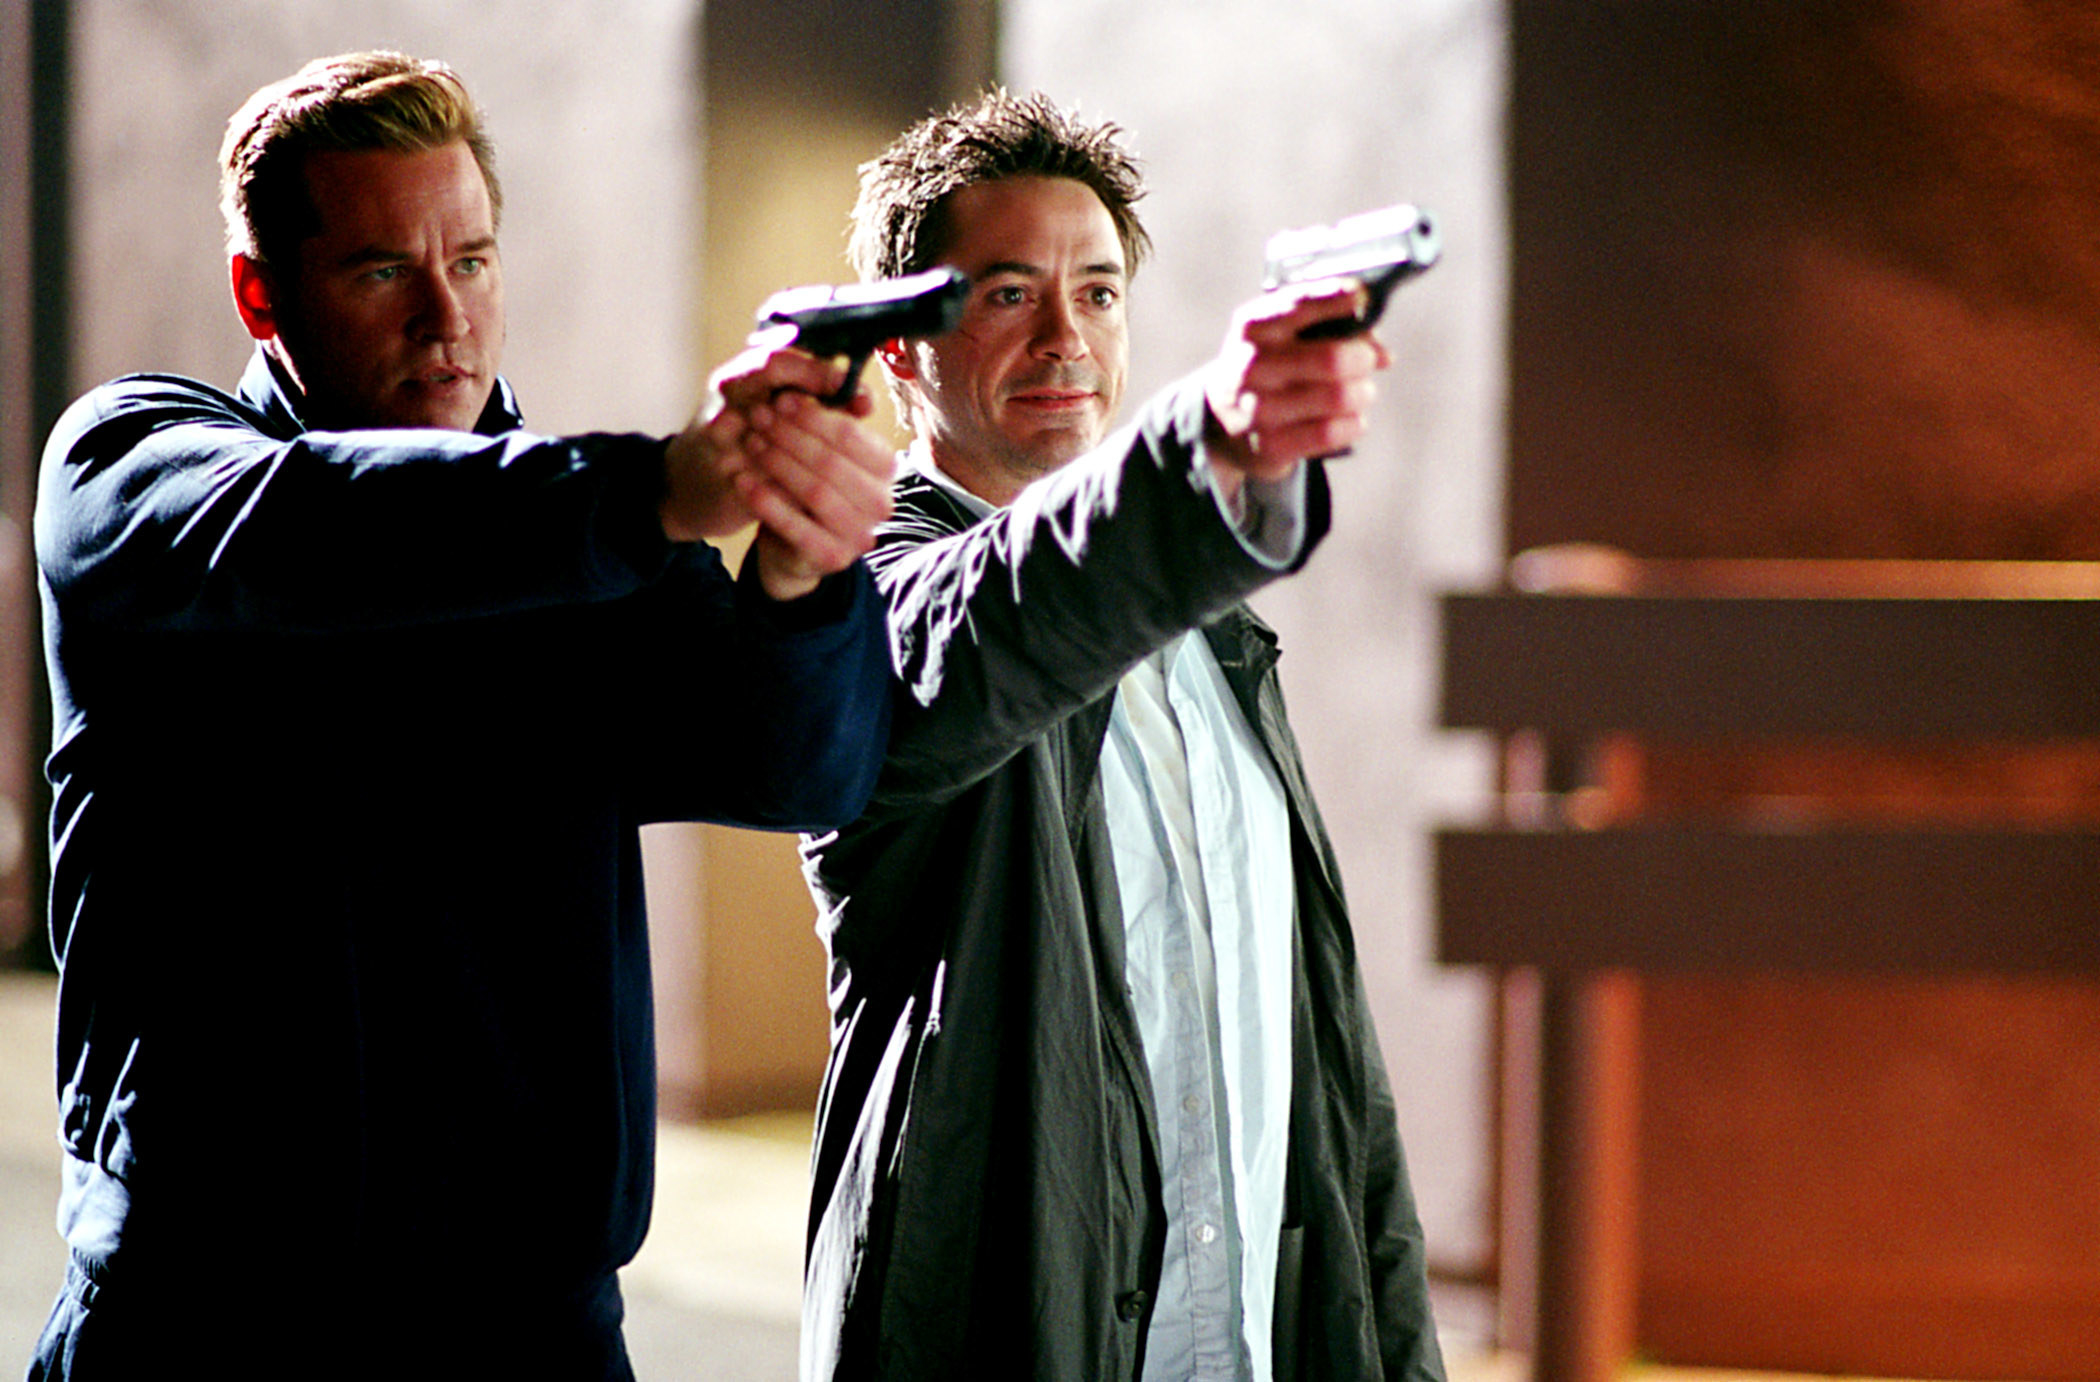 Val Kilmer and Robert Downey Jr pointing guns at something off screen